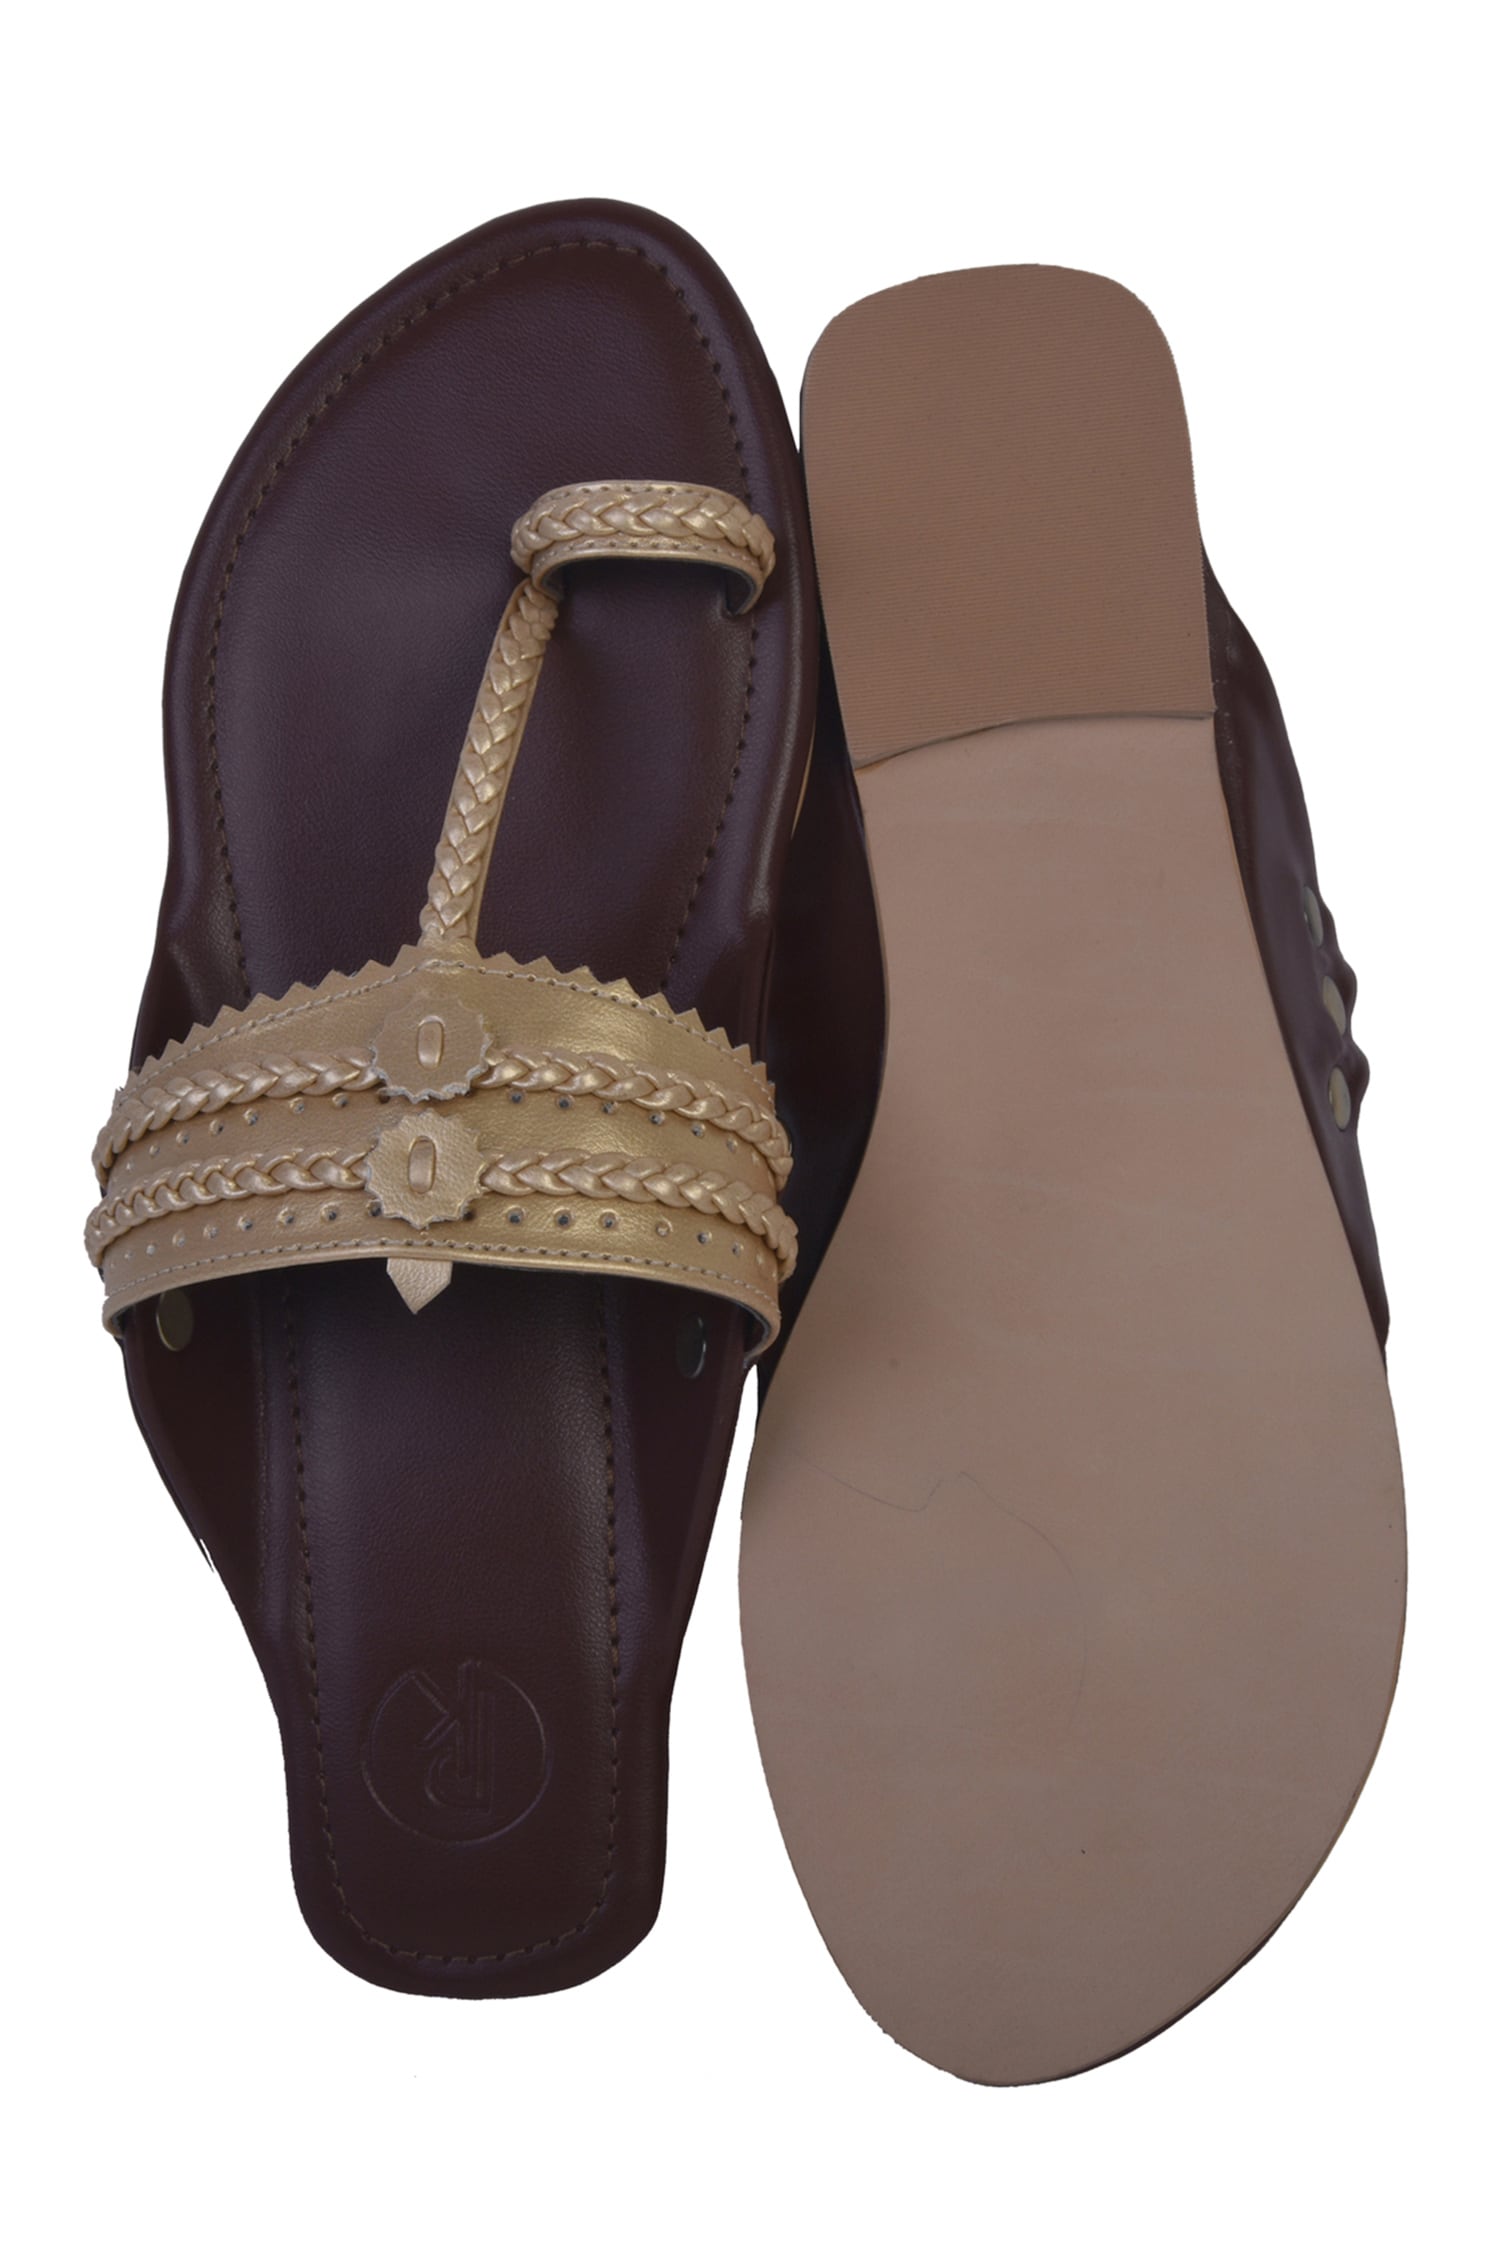 Buy Kolhapuri Sandals by Preet Kaur at Aza Fashions